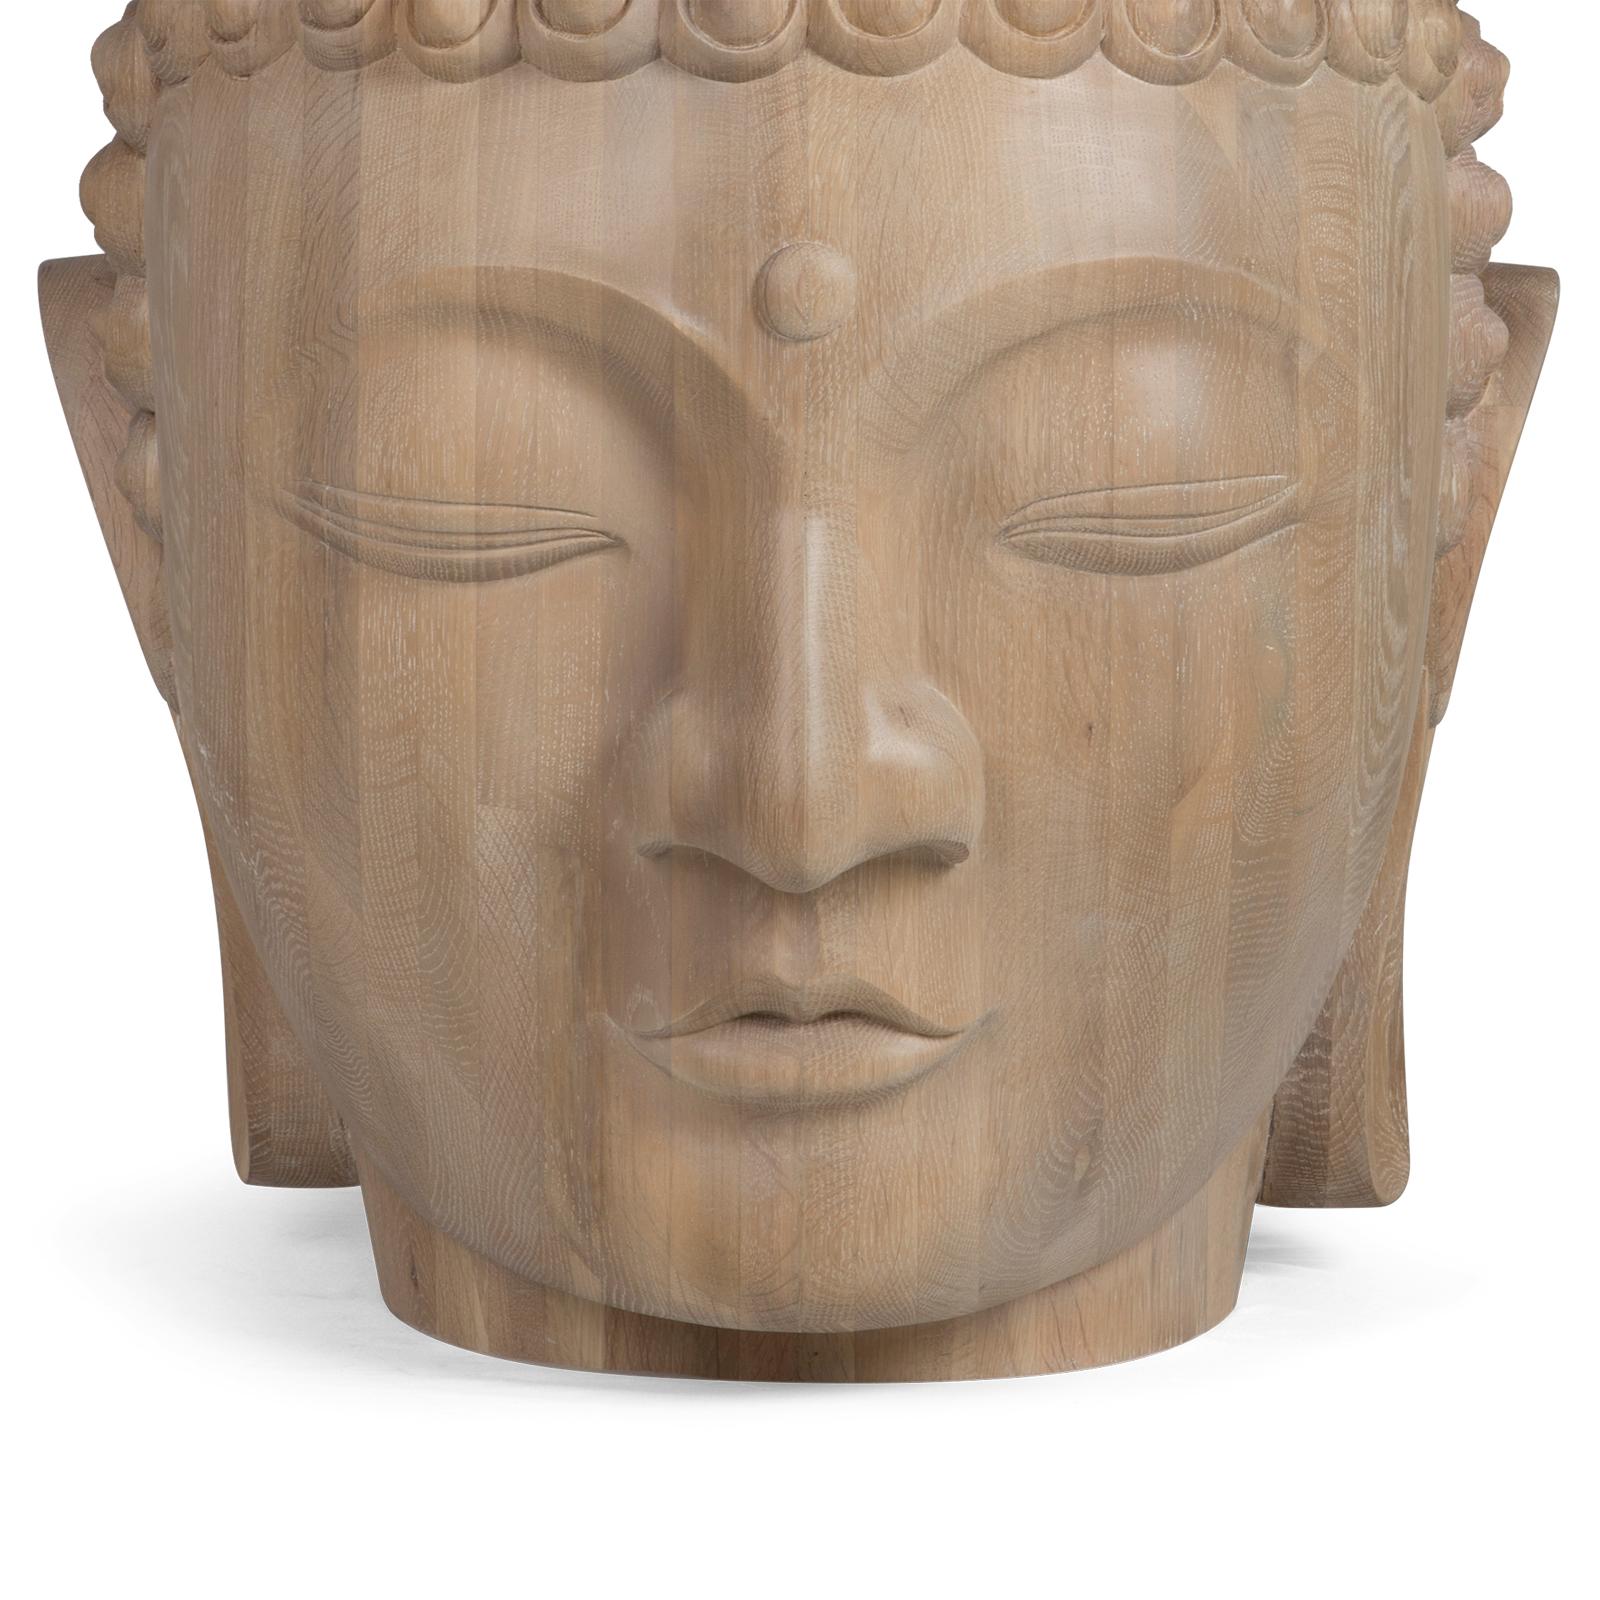 English Buddha Head Sculpture in Solid Oak